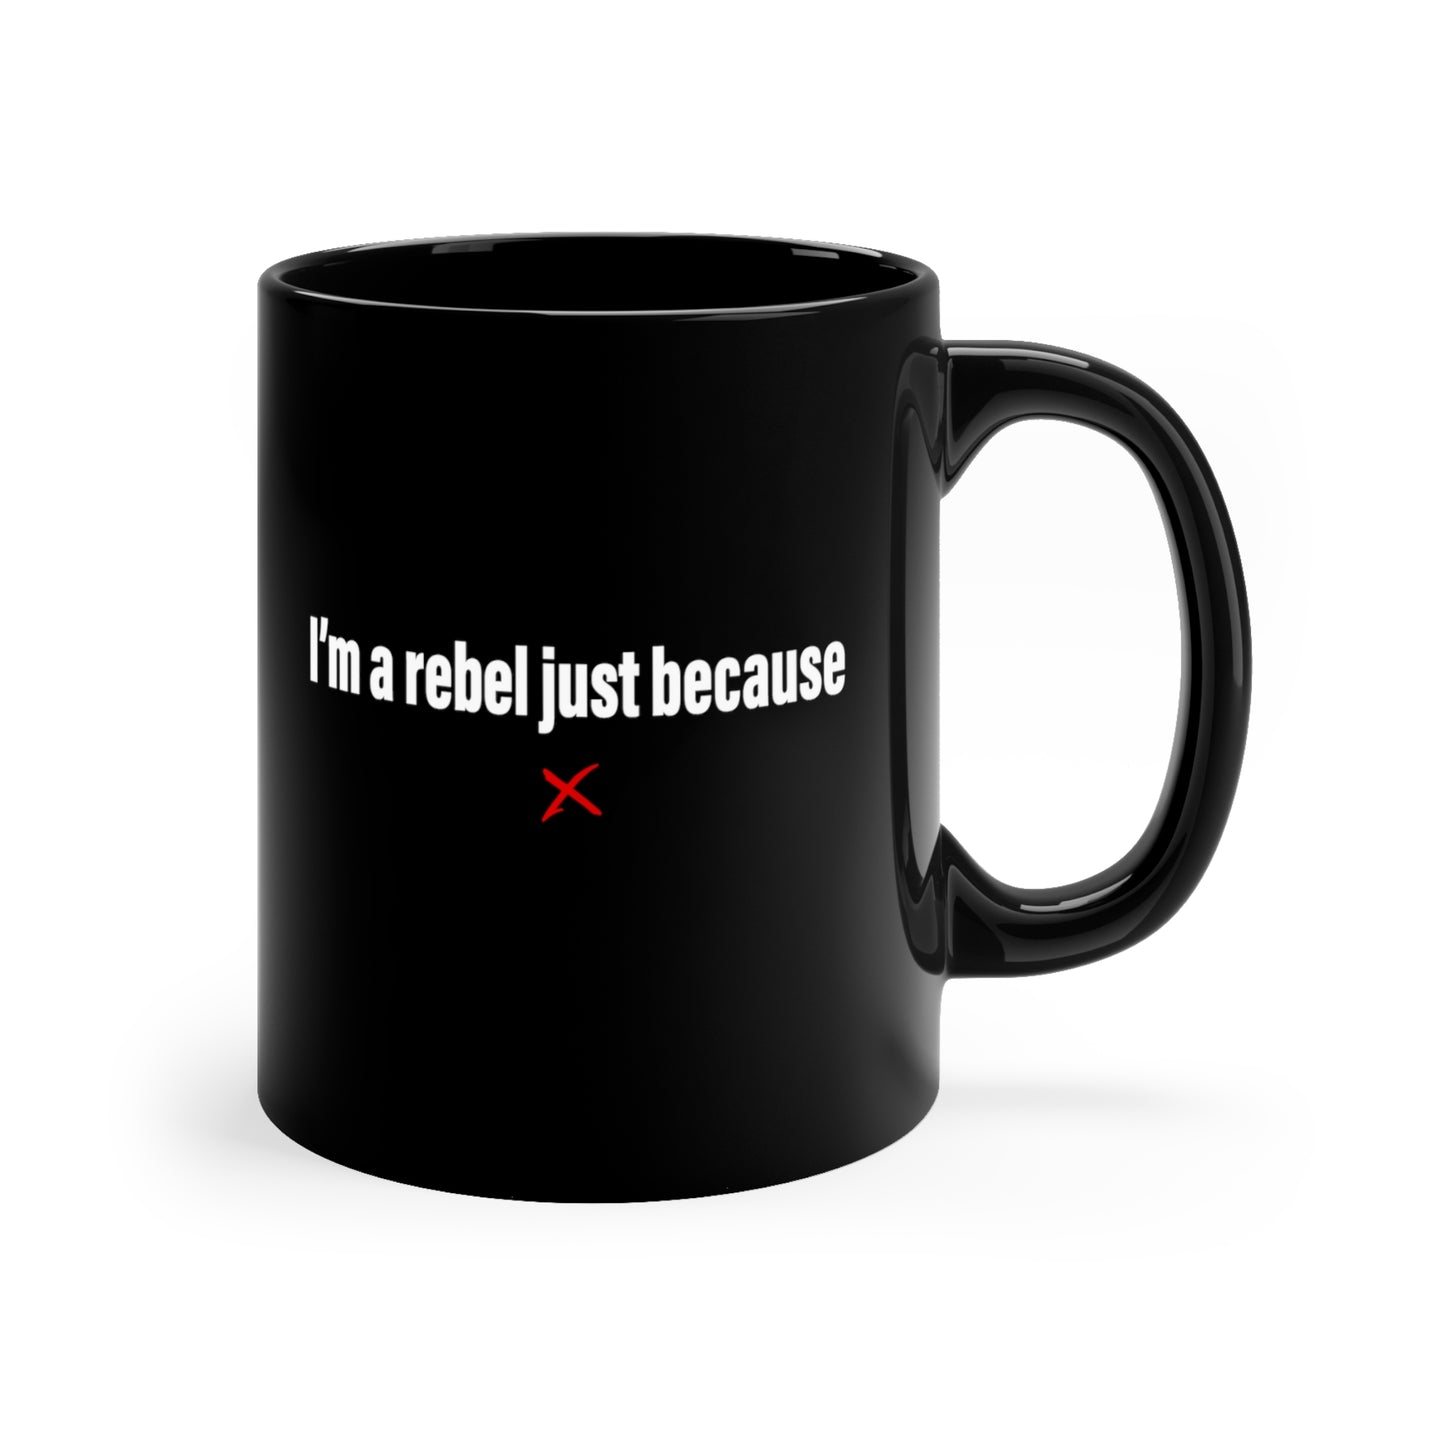 I'm a rebel just because - Mug